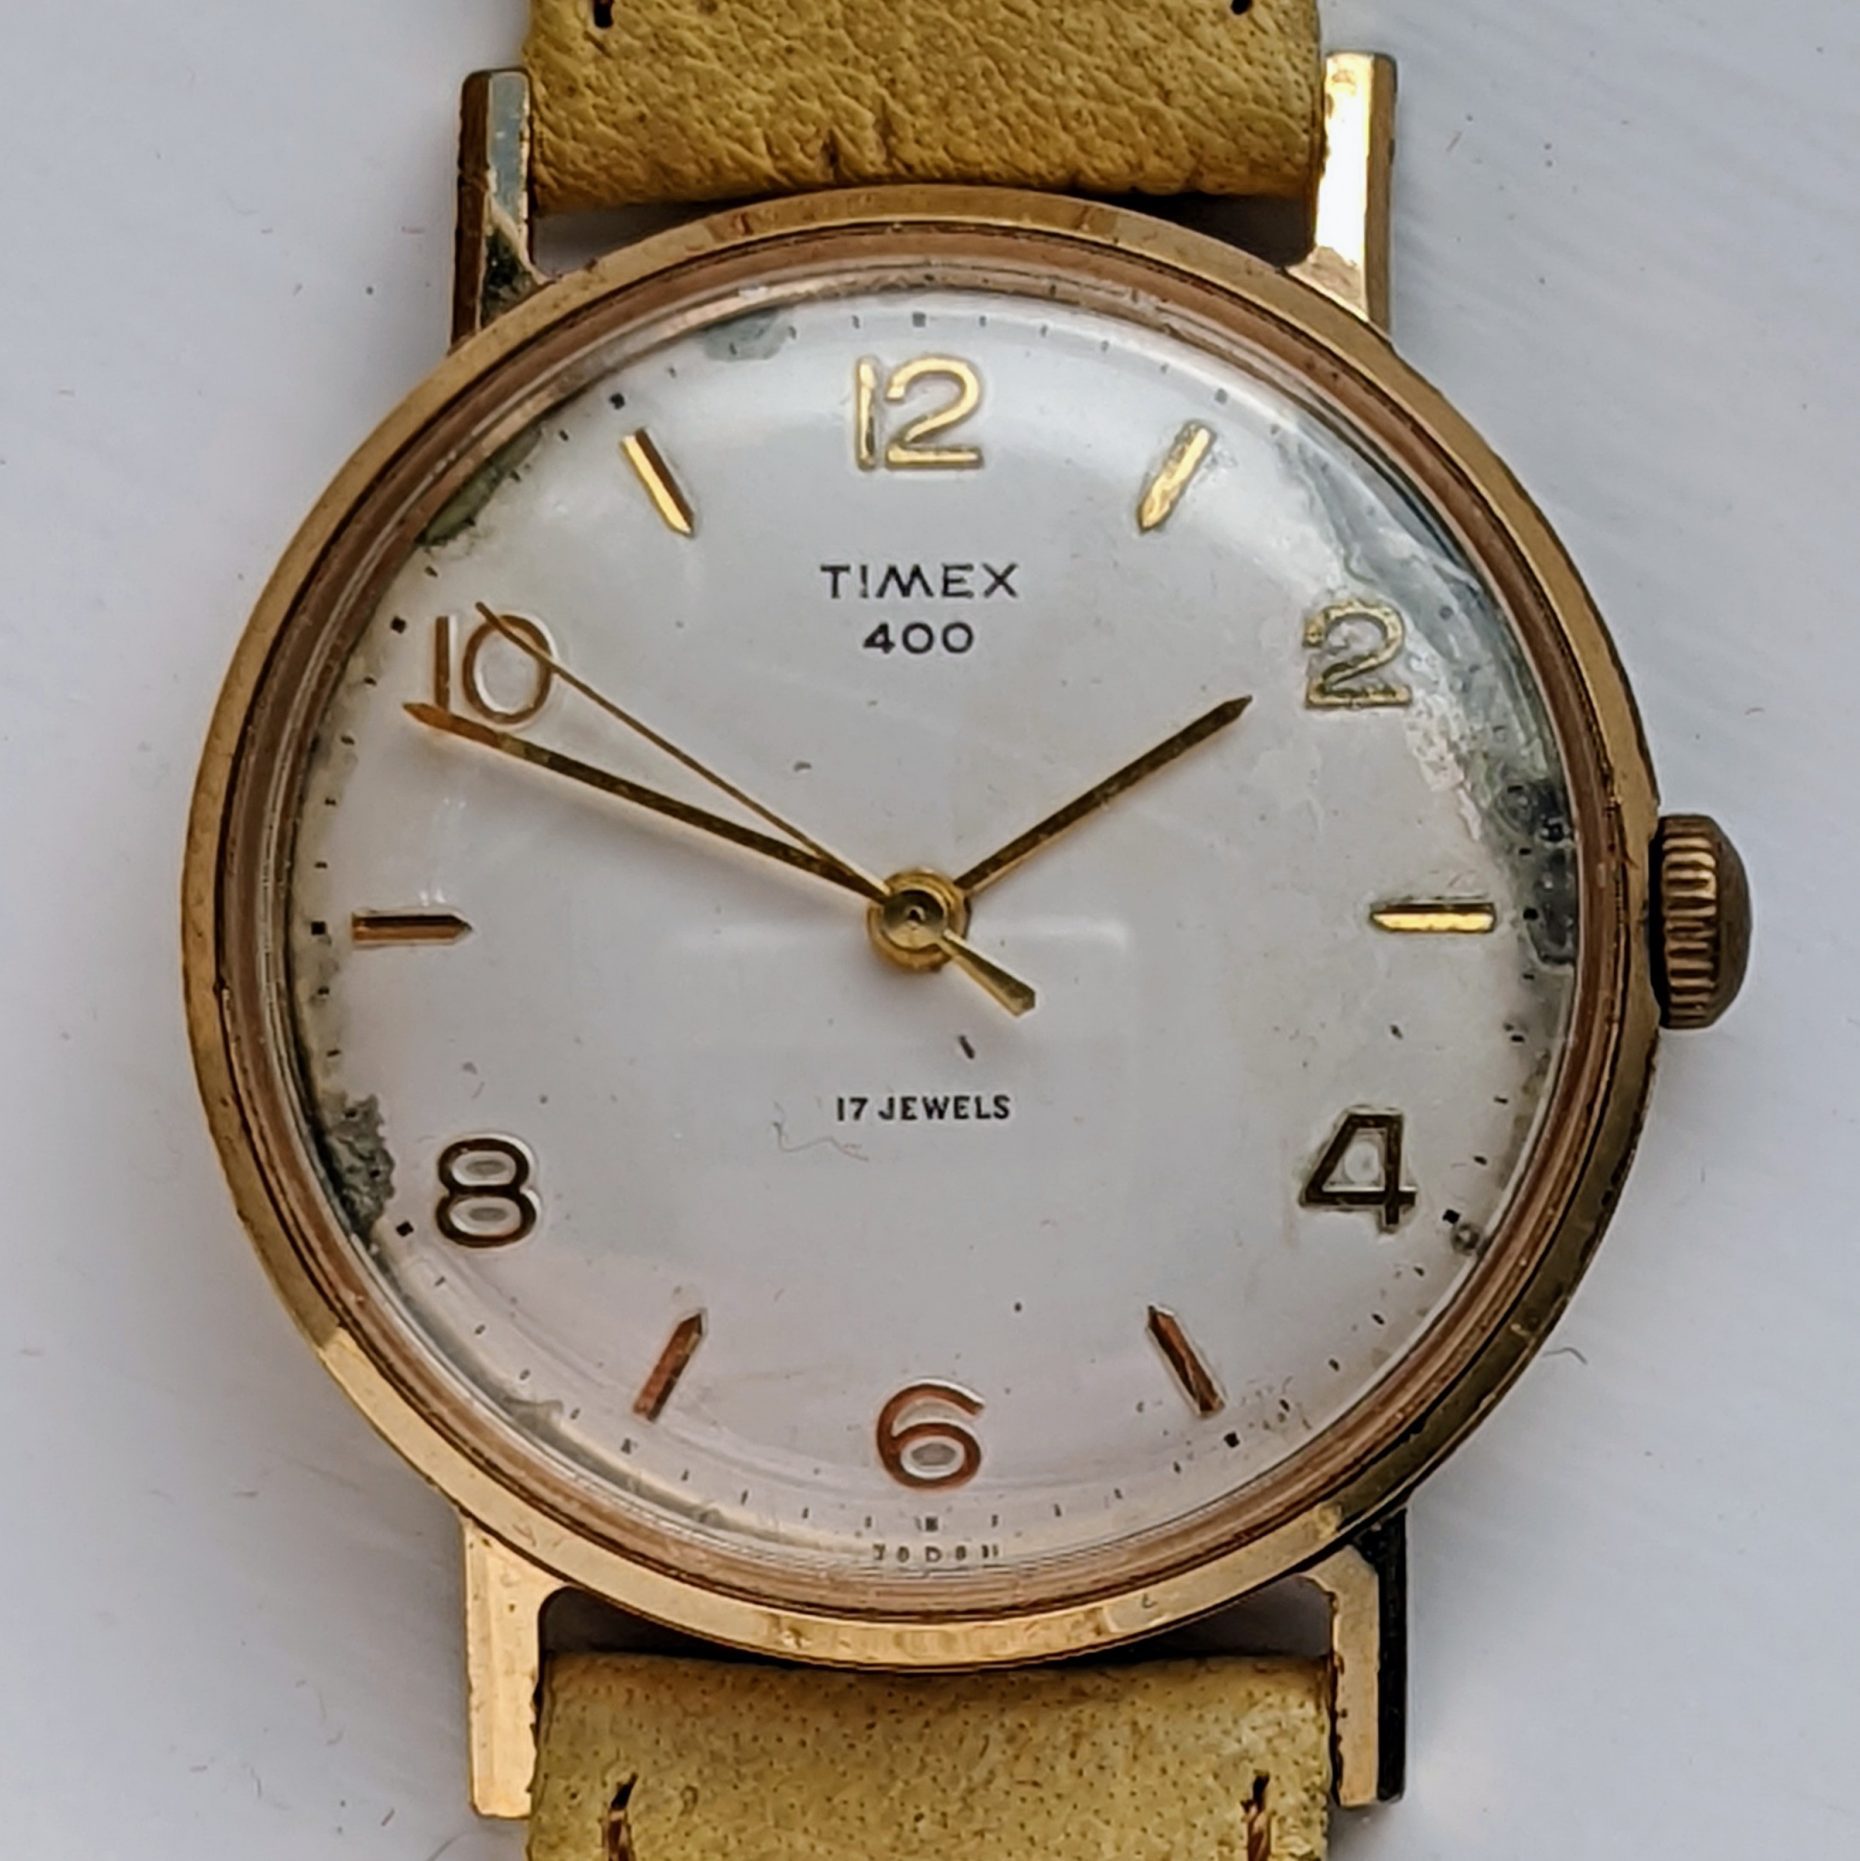 Timex 400 6084 7061 [1961]